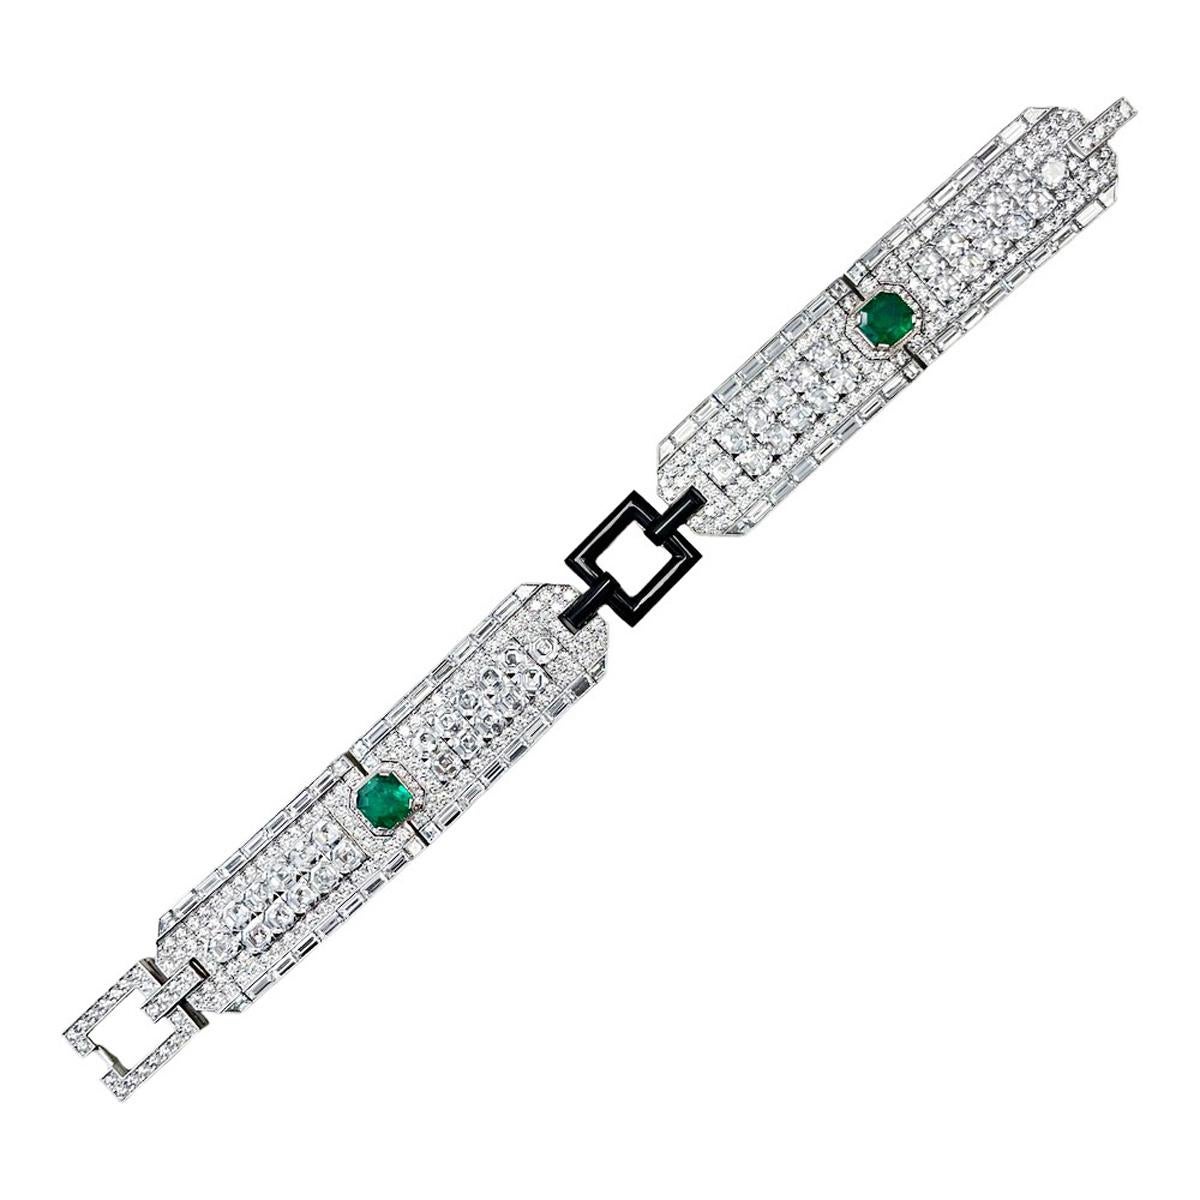 25.12 Carat Ascher Cut Diamond & Emerald Bracelet In Excellent Condition For Sale In Miami, FL